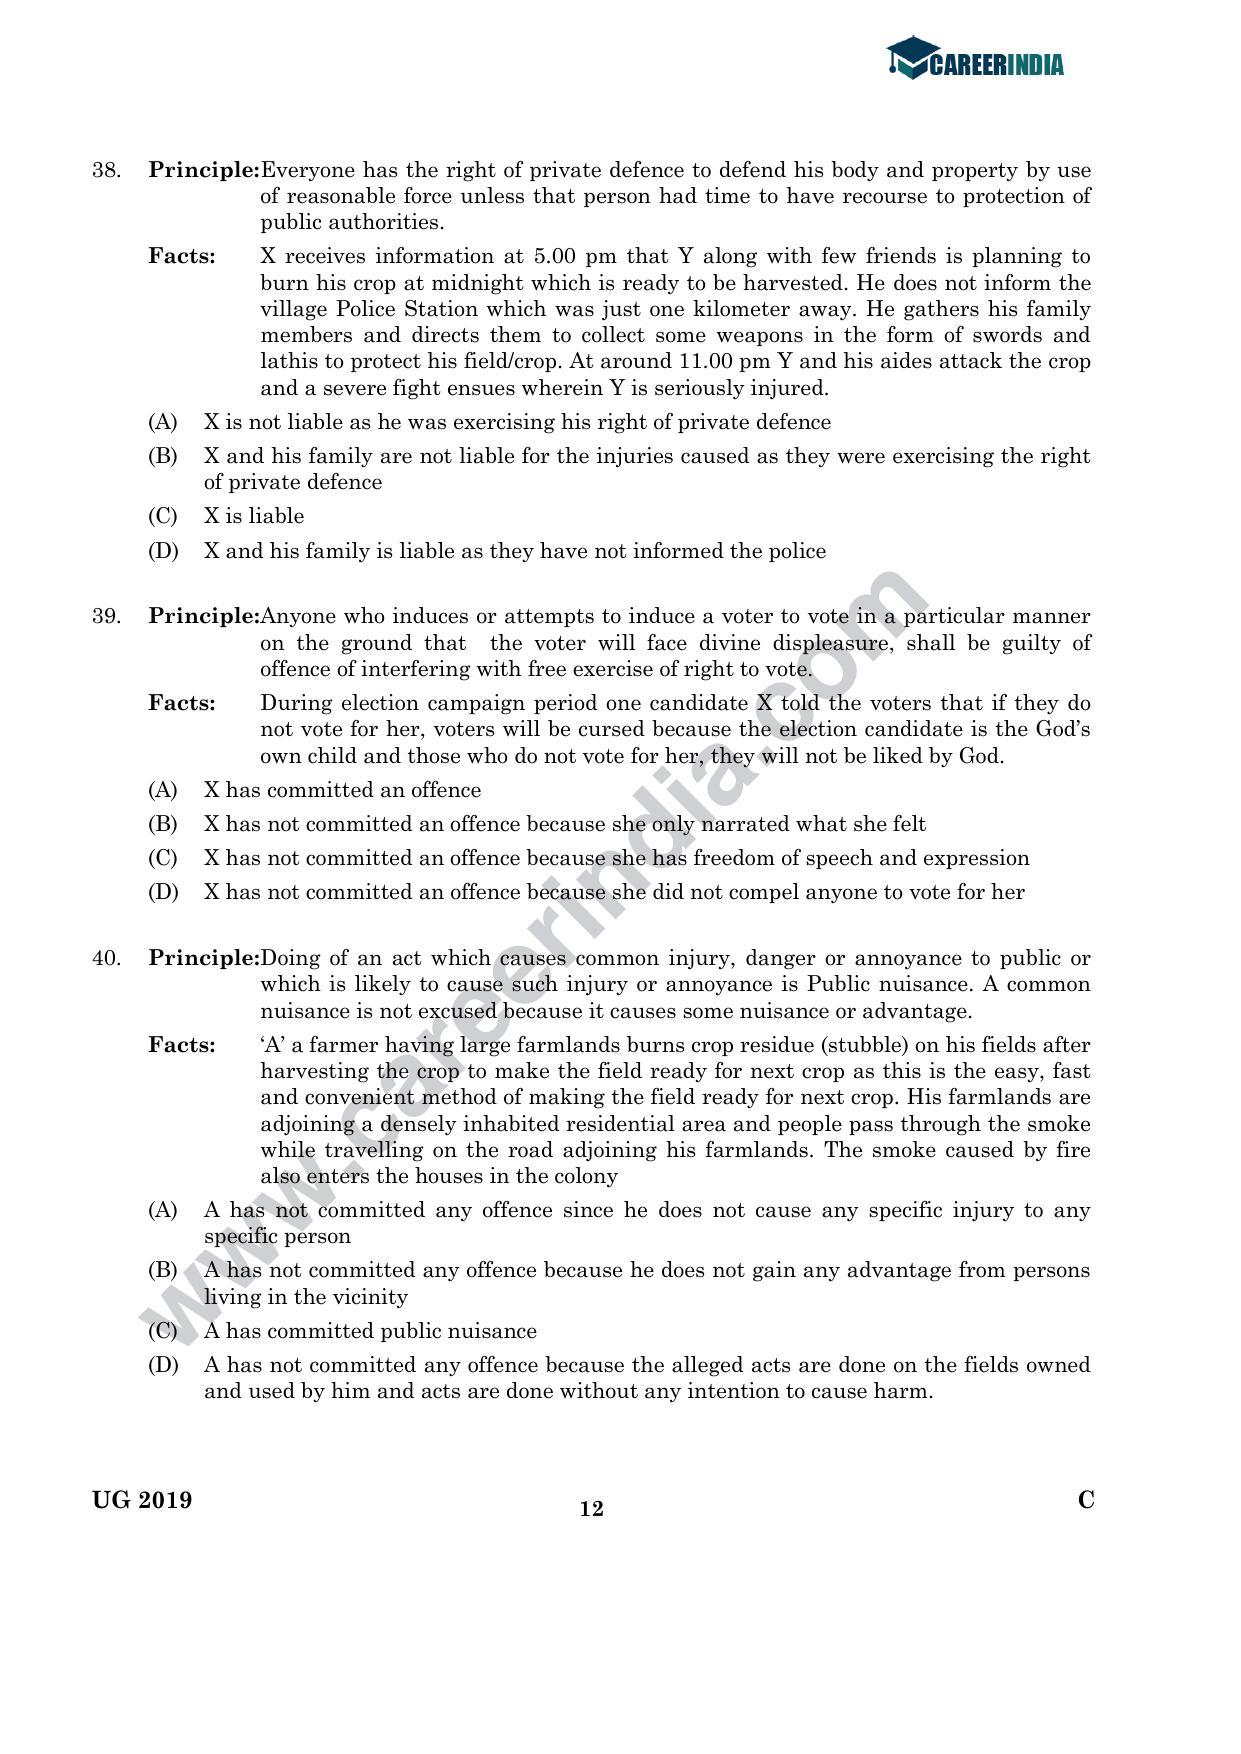 CLAT 2019 UG Legal-Aptitude Question Paper - Page 11